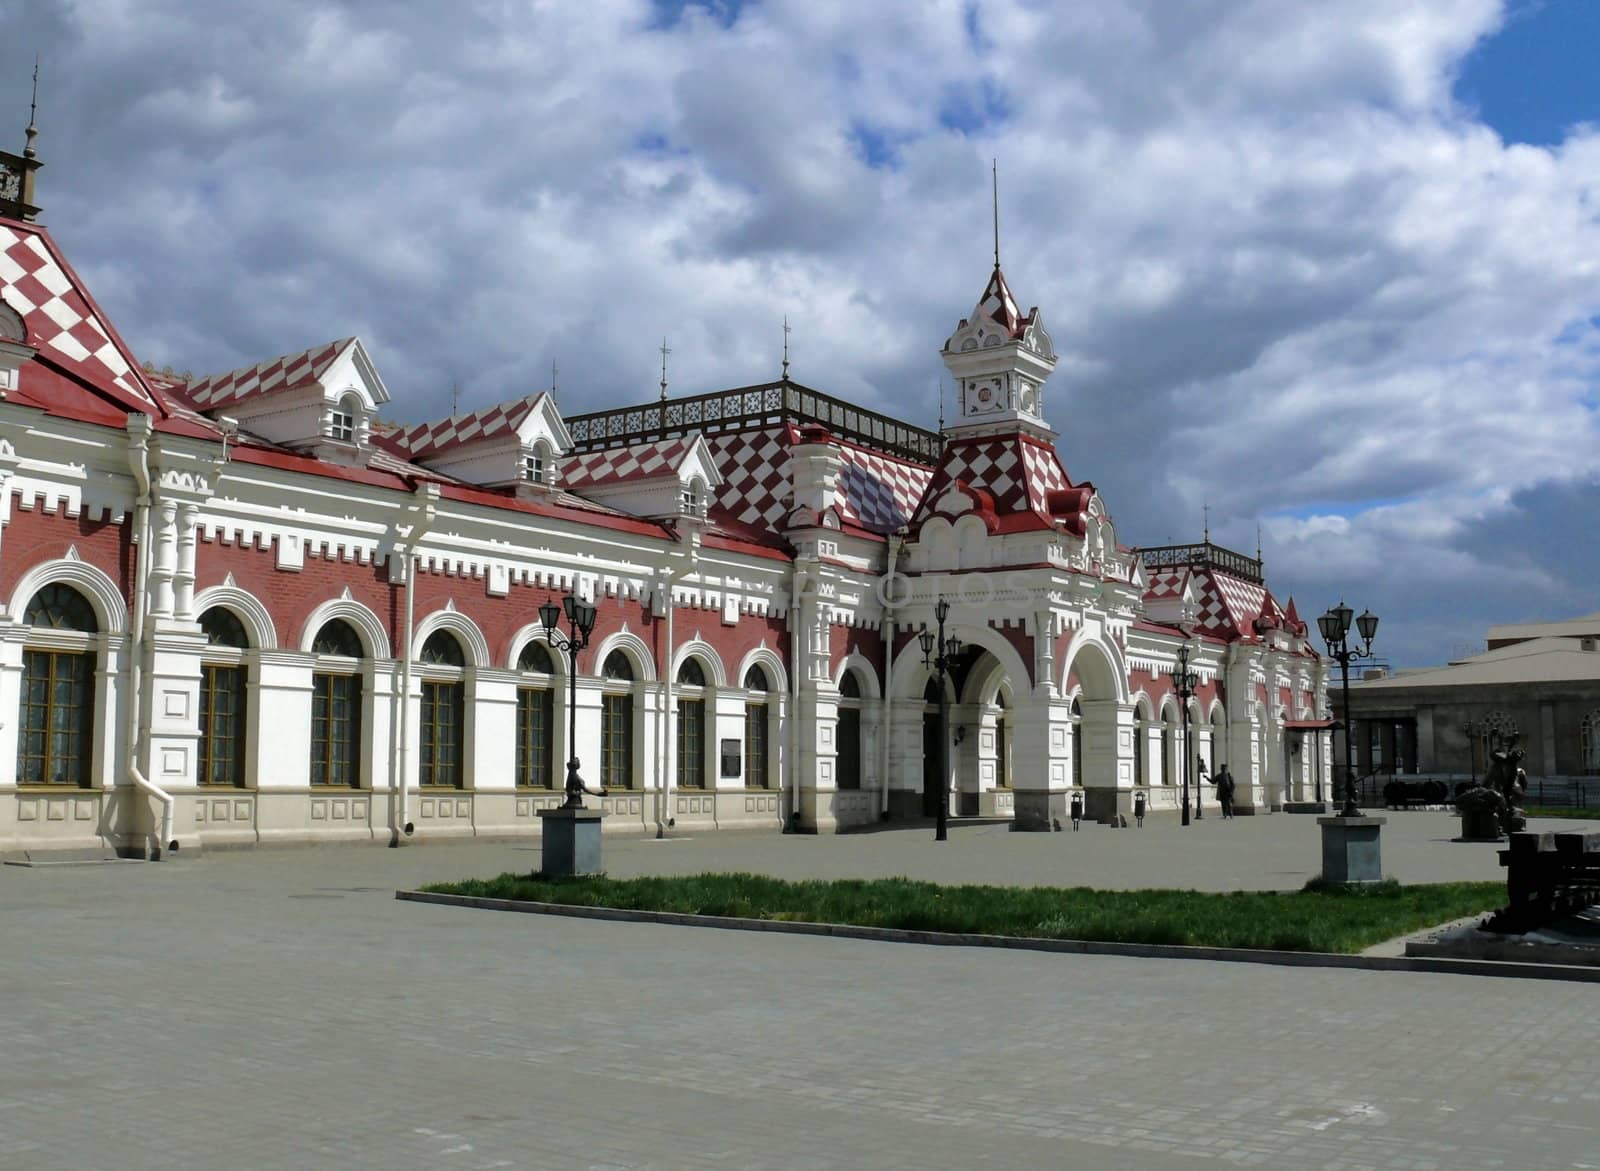 Facade of old railway station - Yekaterinburg